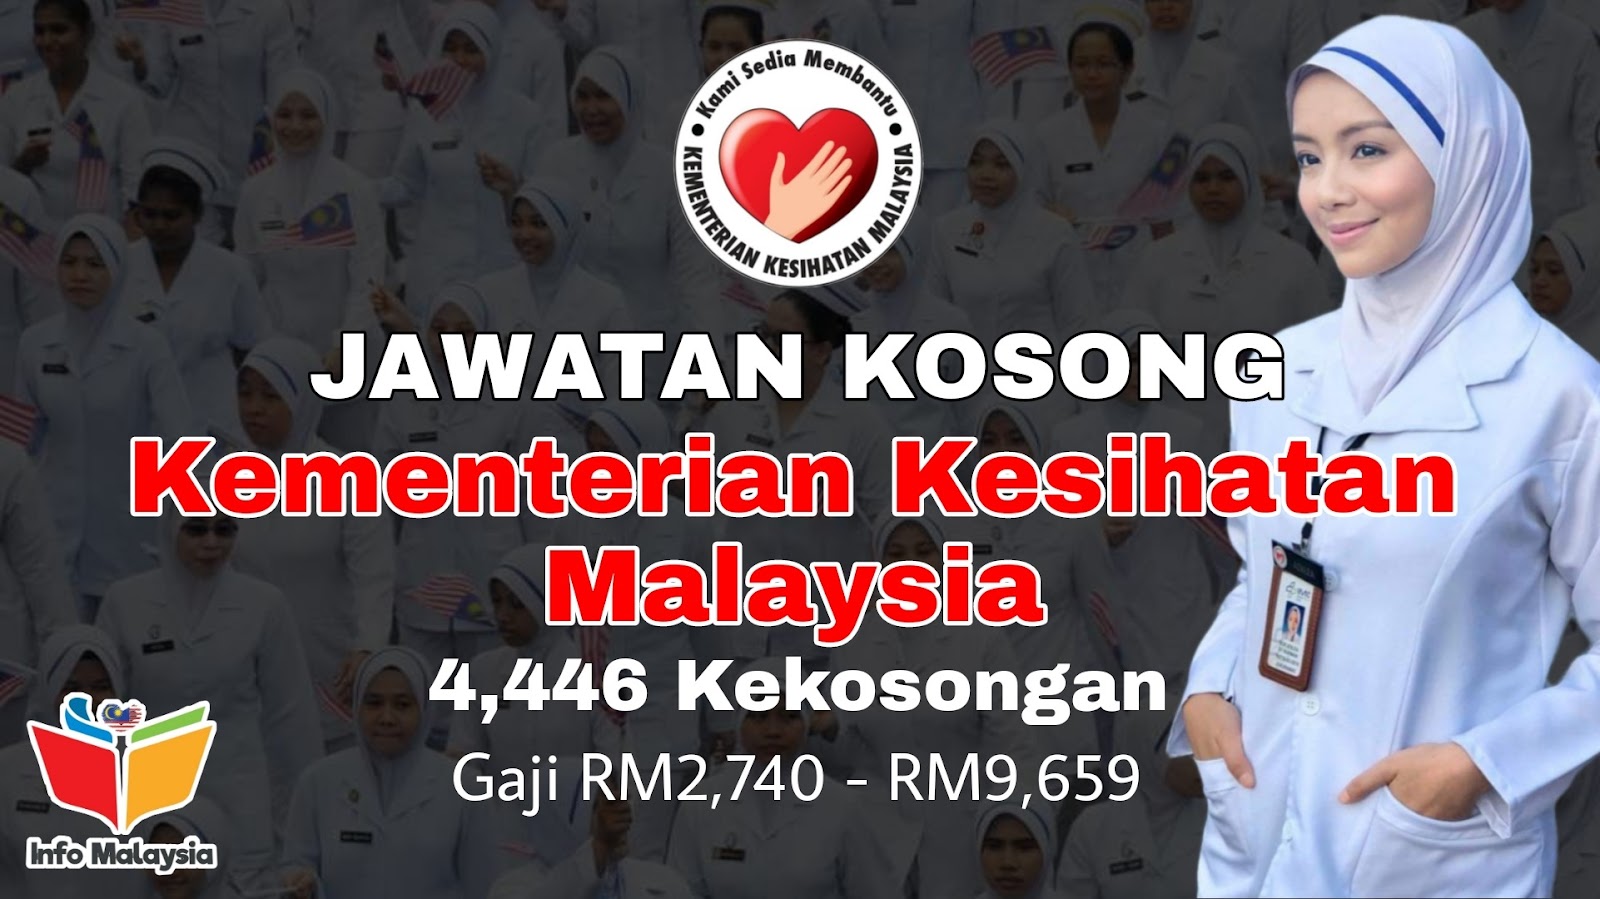 Jawatan Kosong Kementerian Kesihatan Malaysia Kkm 4 446 Kekosongan Gaji Rm2 740 Rm9 659 Infomalaysiakini